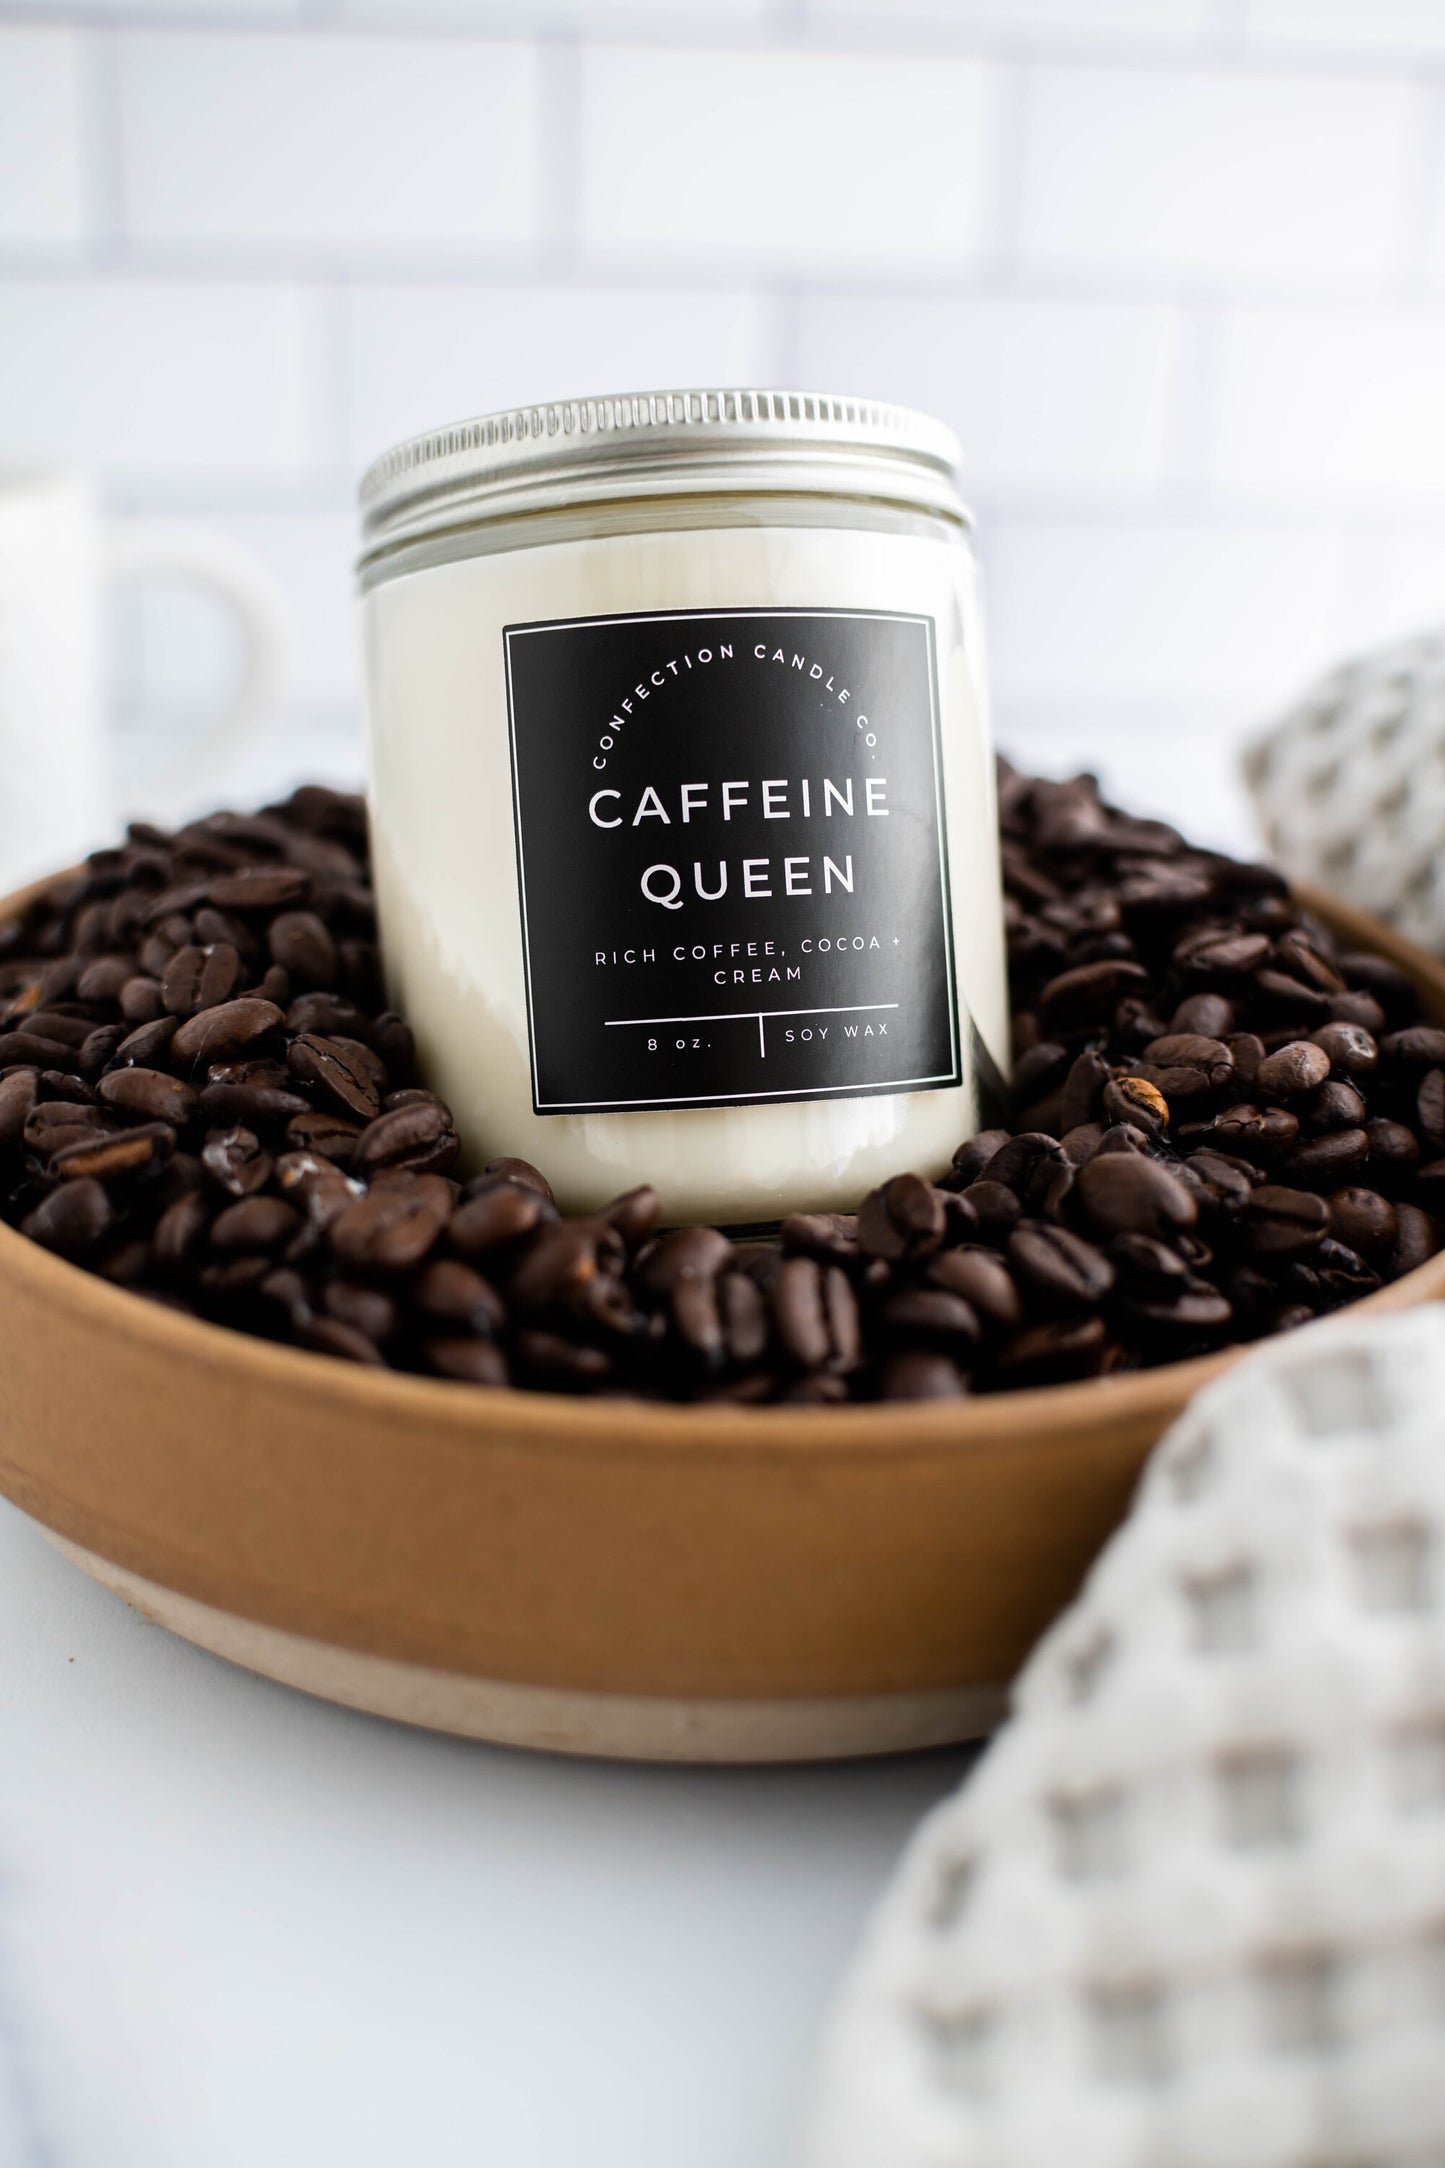 Caffeine Queen Candle